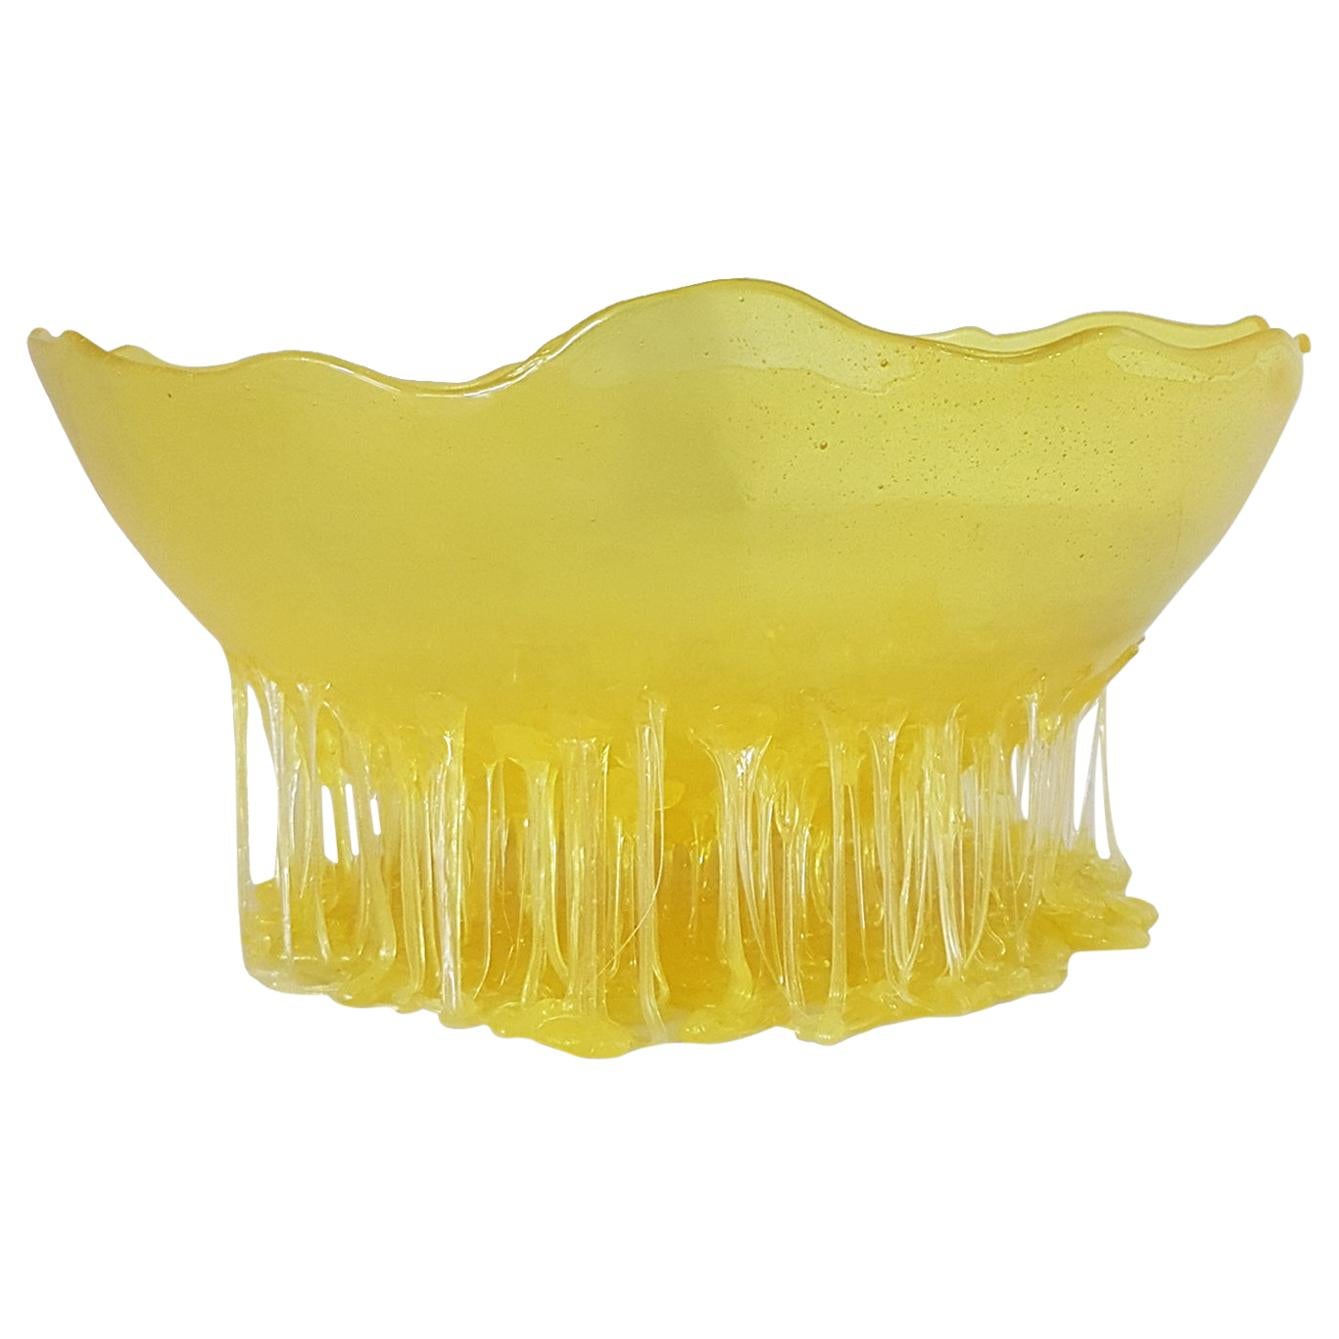 Gaetano Pesce Italian Contemporary Yellow Decorative Basket in Polyurethan Resin For Sale